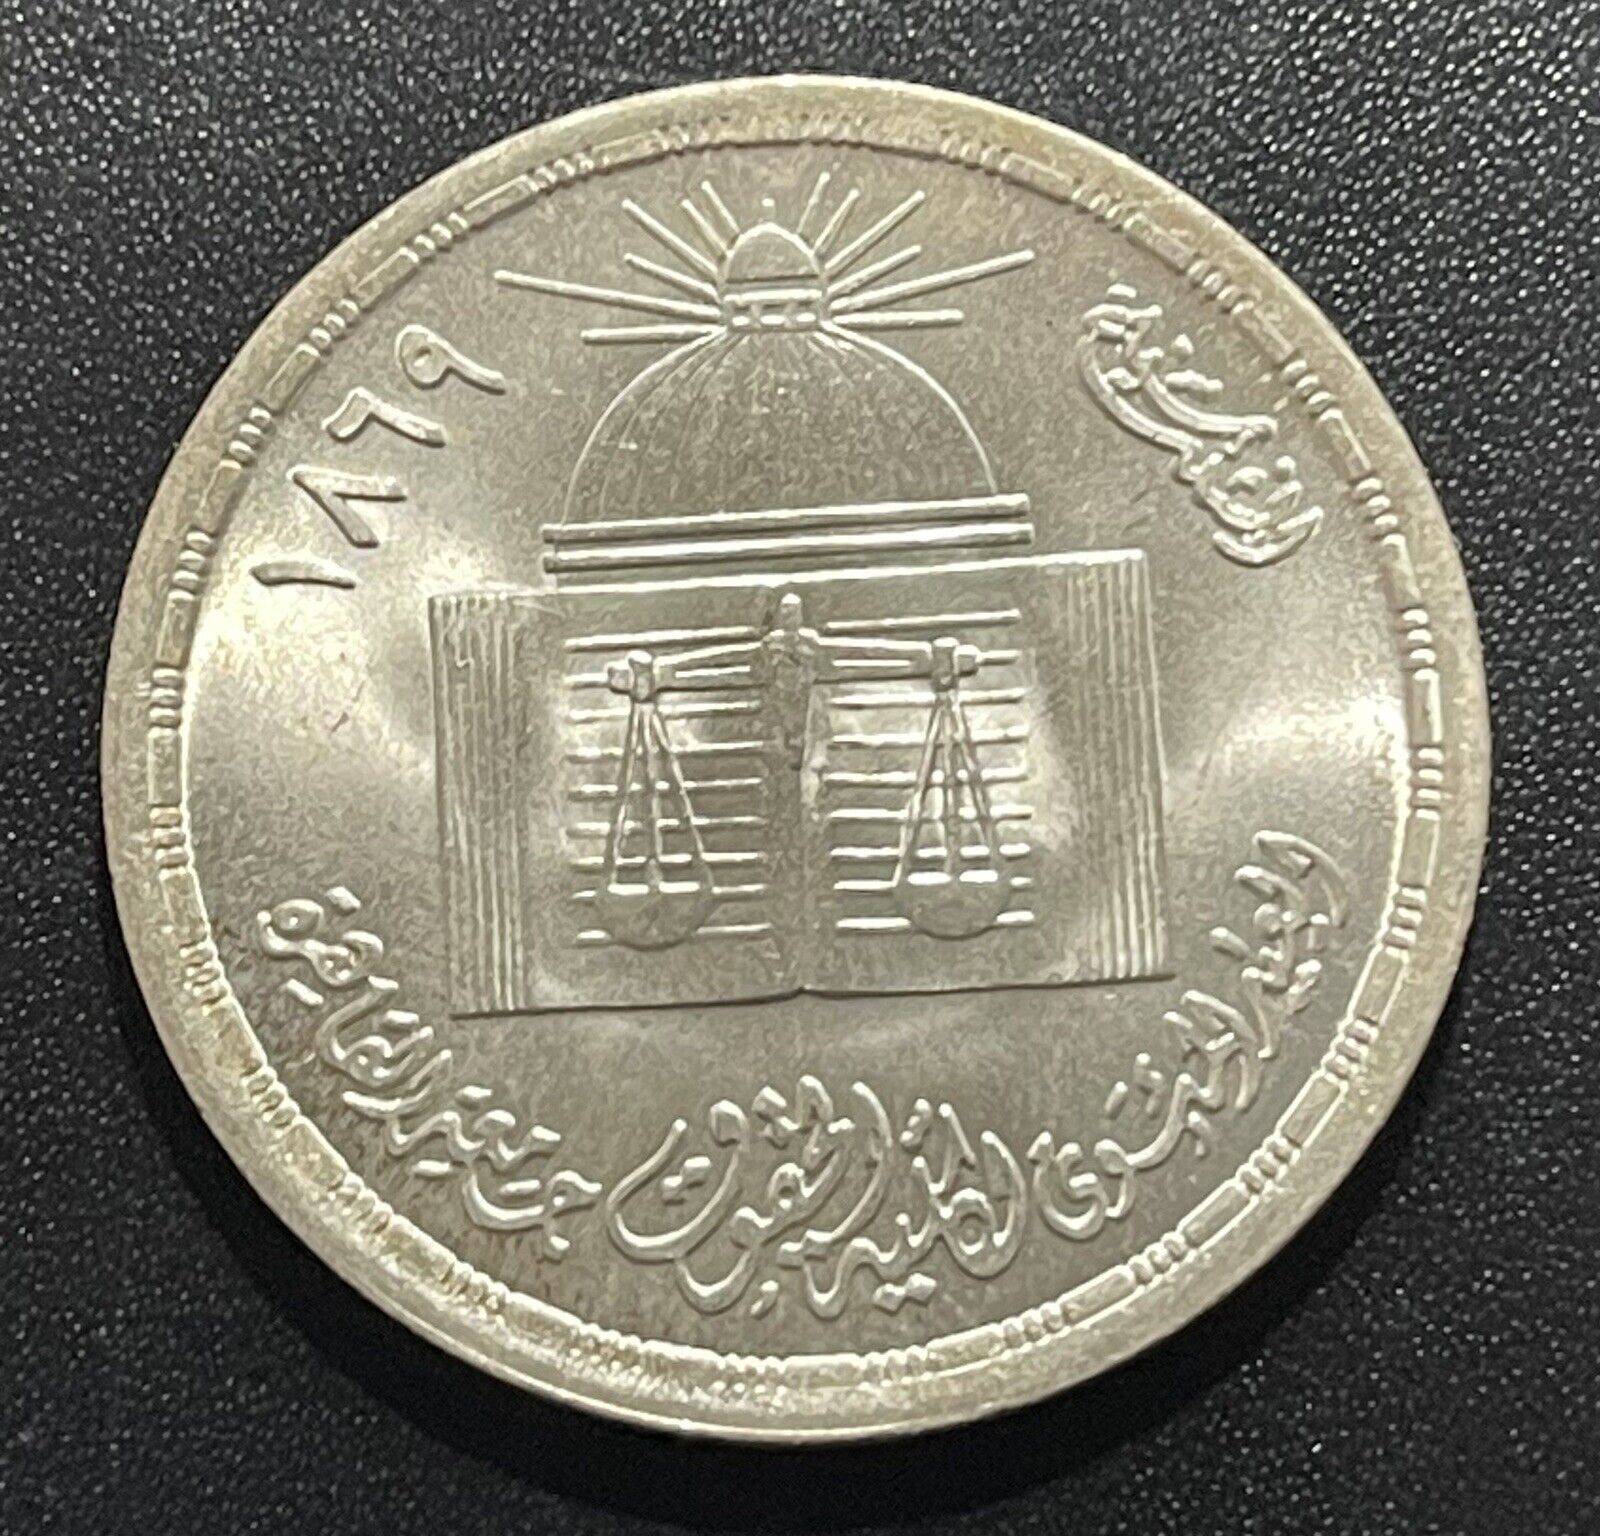 Egypt 1980 Pound Silver Coin